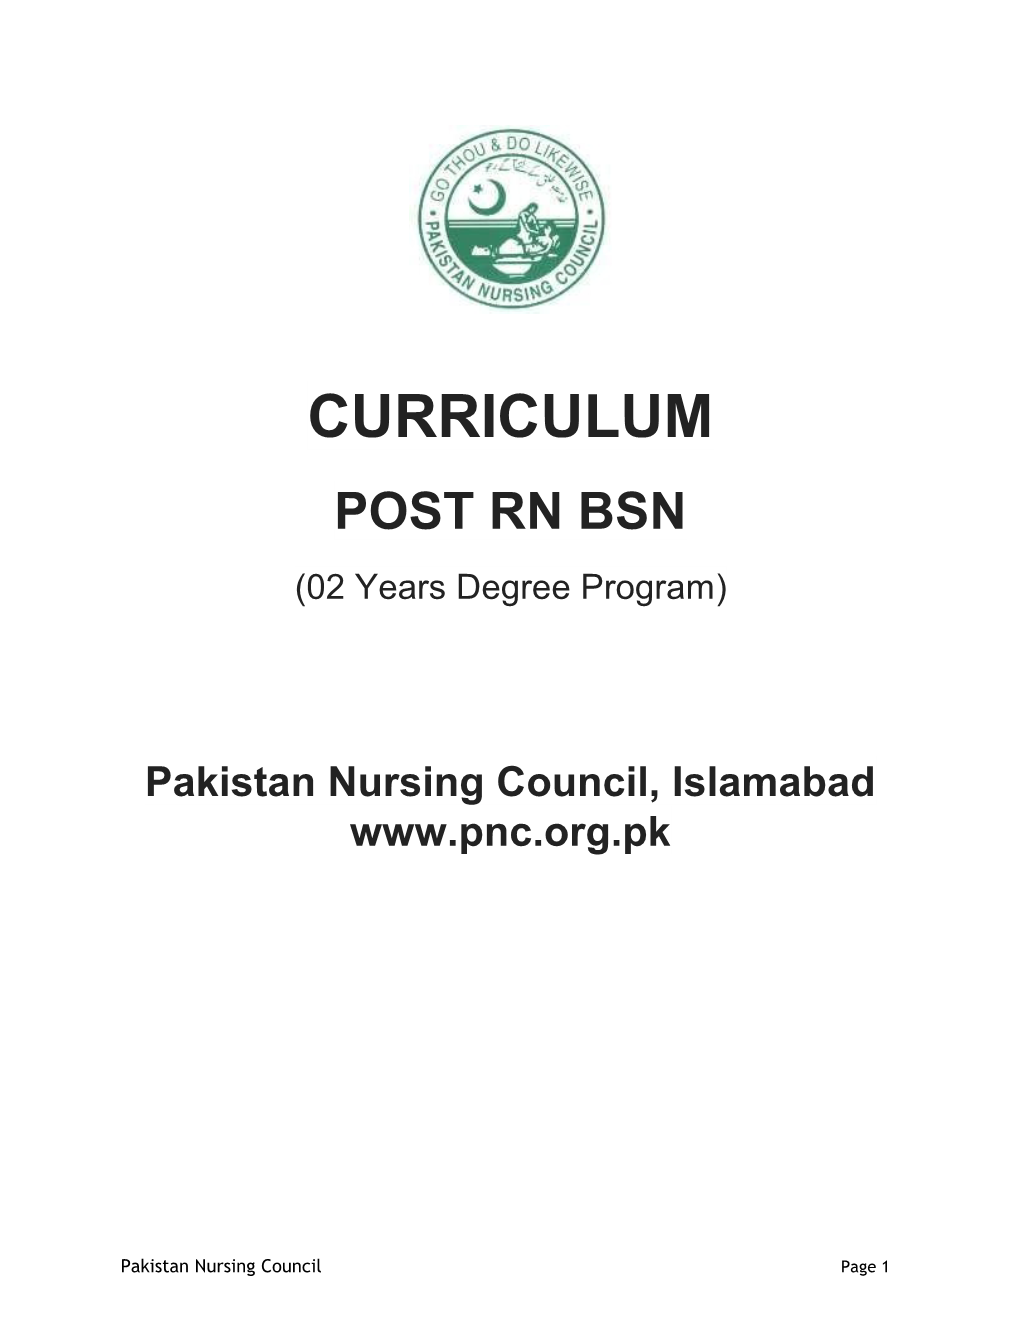 CURRICULUM POST RN BSN (02 Years Degree Program)